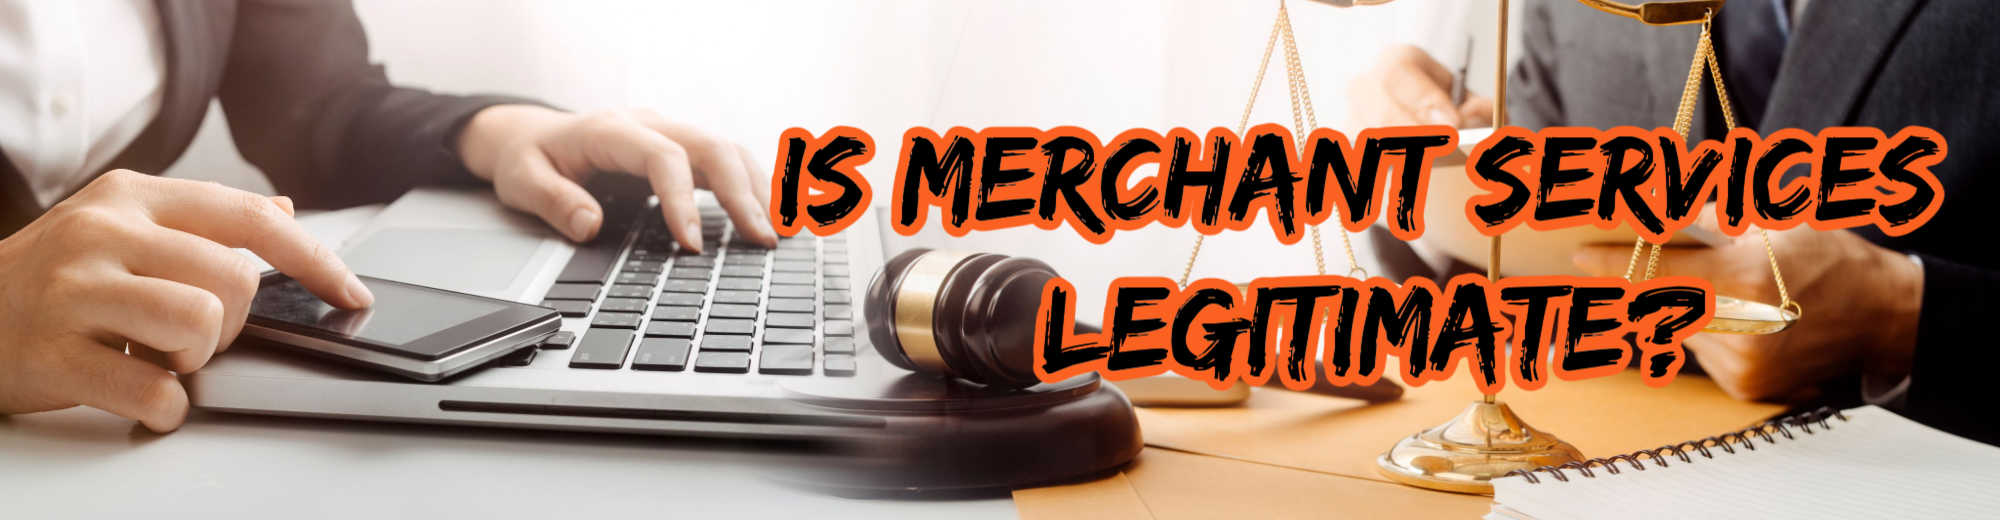 image of is merchant services legitimate